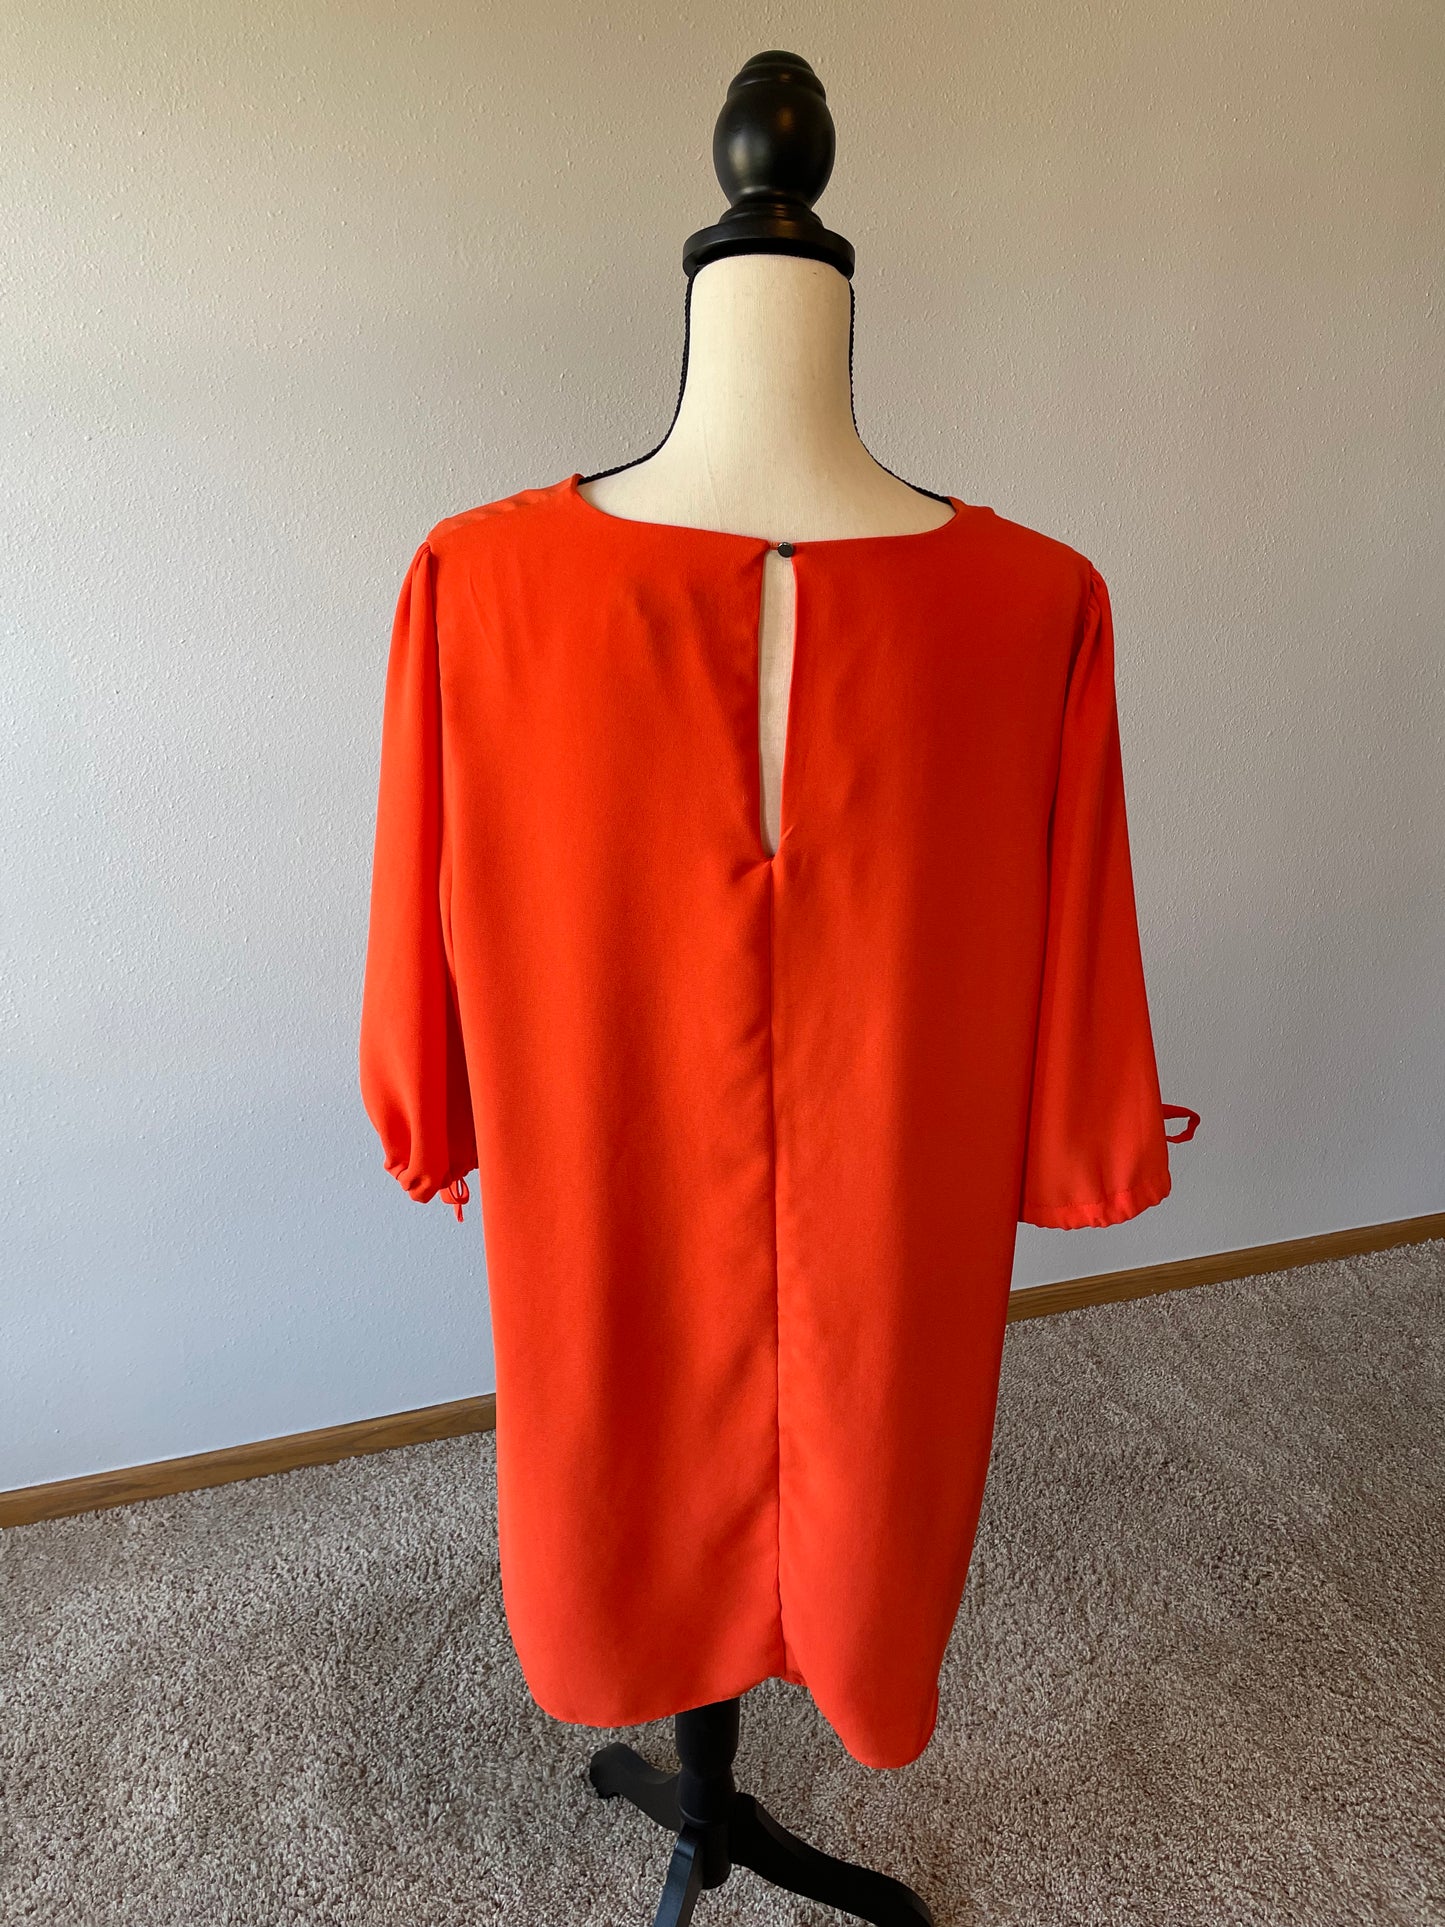 Mossimo Orange Shift Dress (XXL)